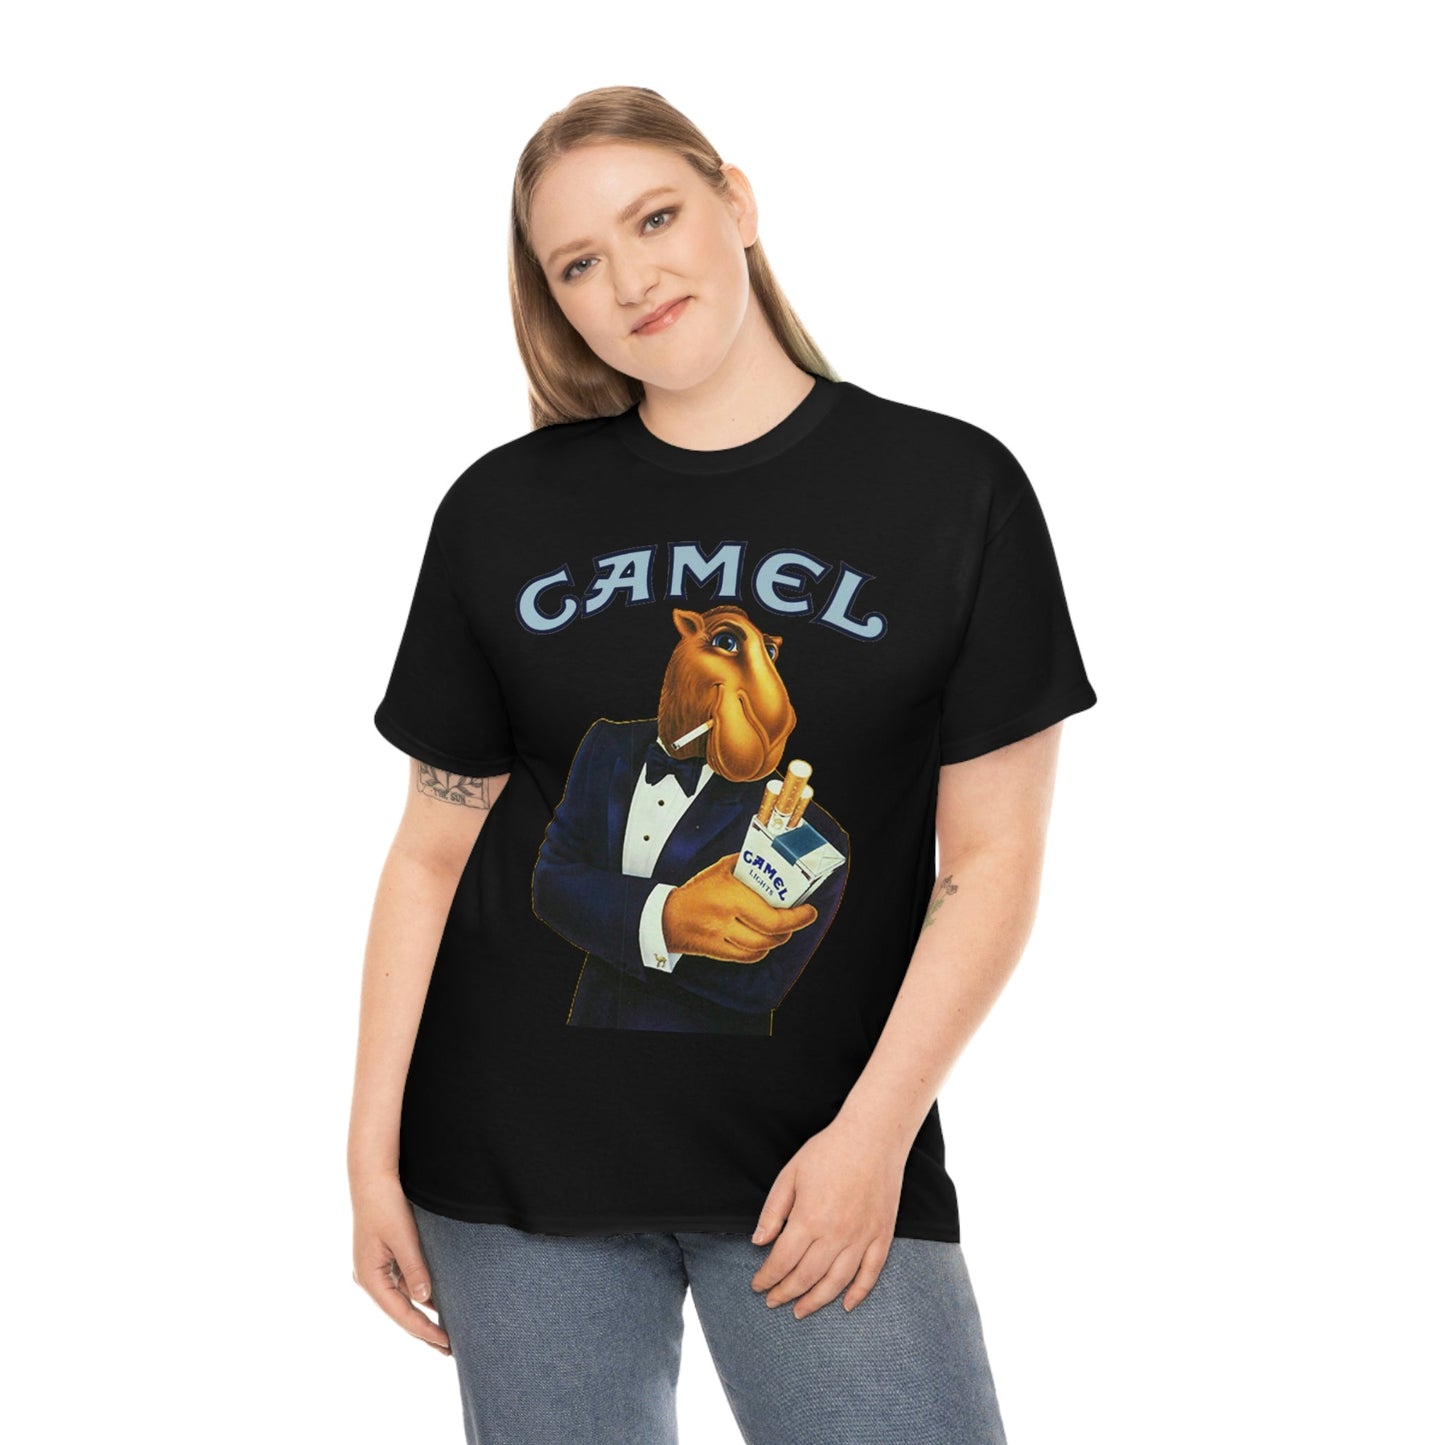 Vintage Camel Cigarette T-Shirt - RetroTeeShop